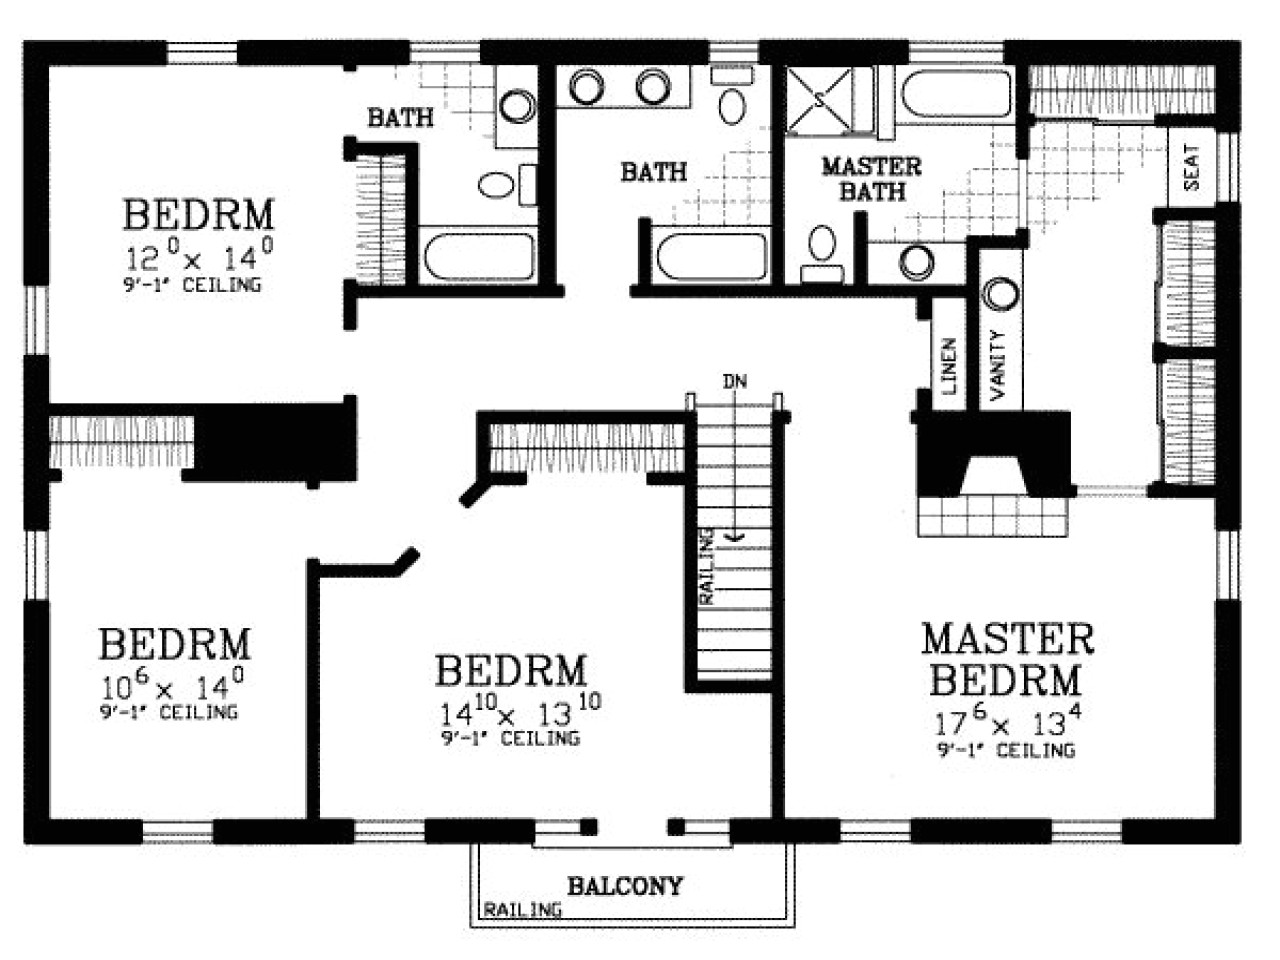 4 bedroom house floor plans free